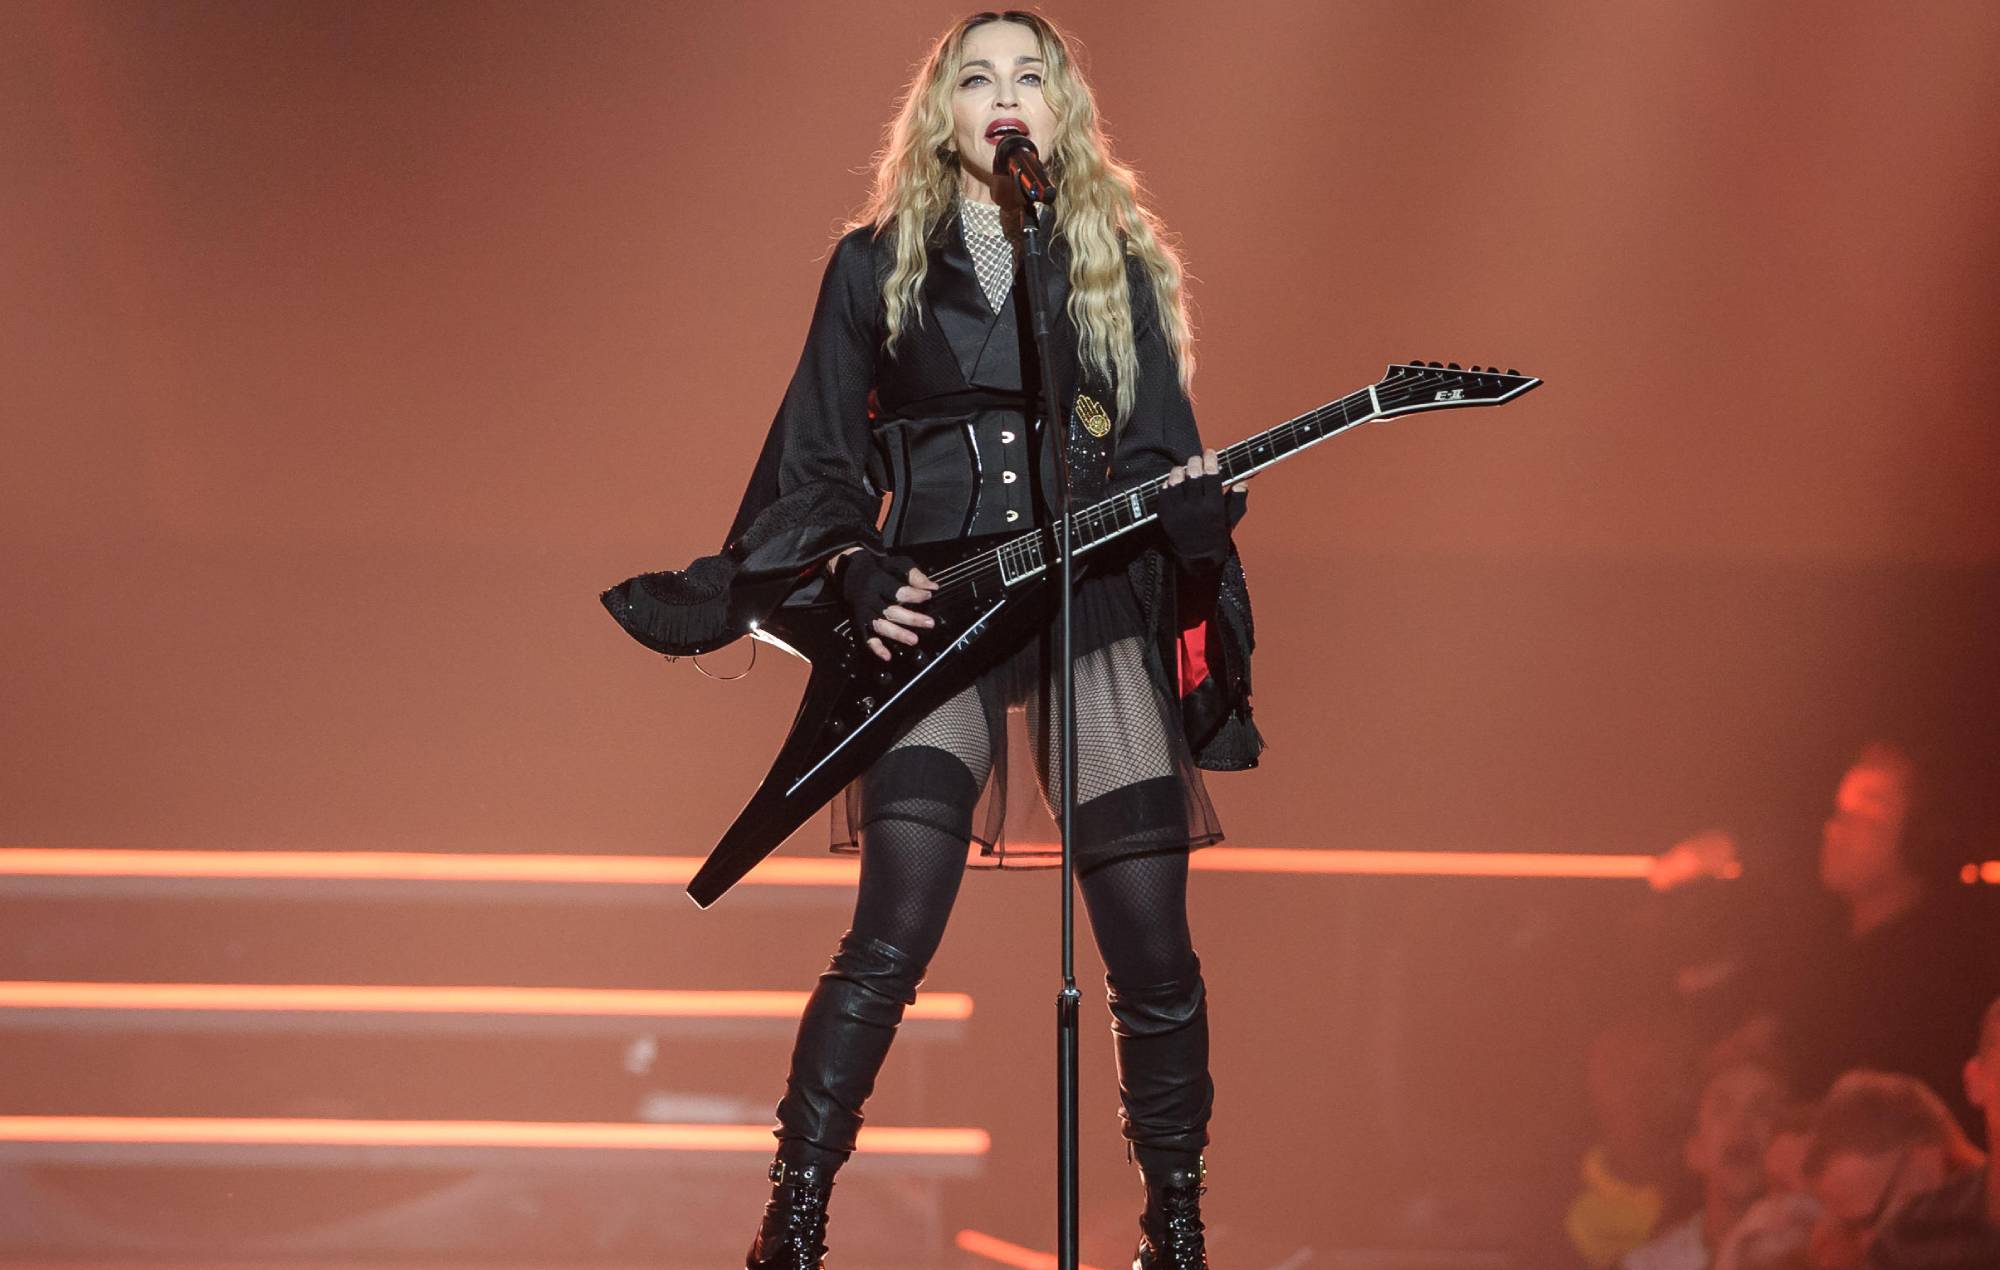 Madonna Celebration Tour 2023 Setlist